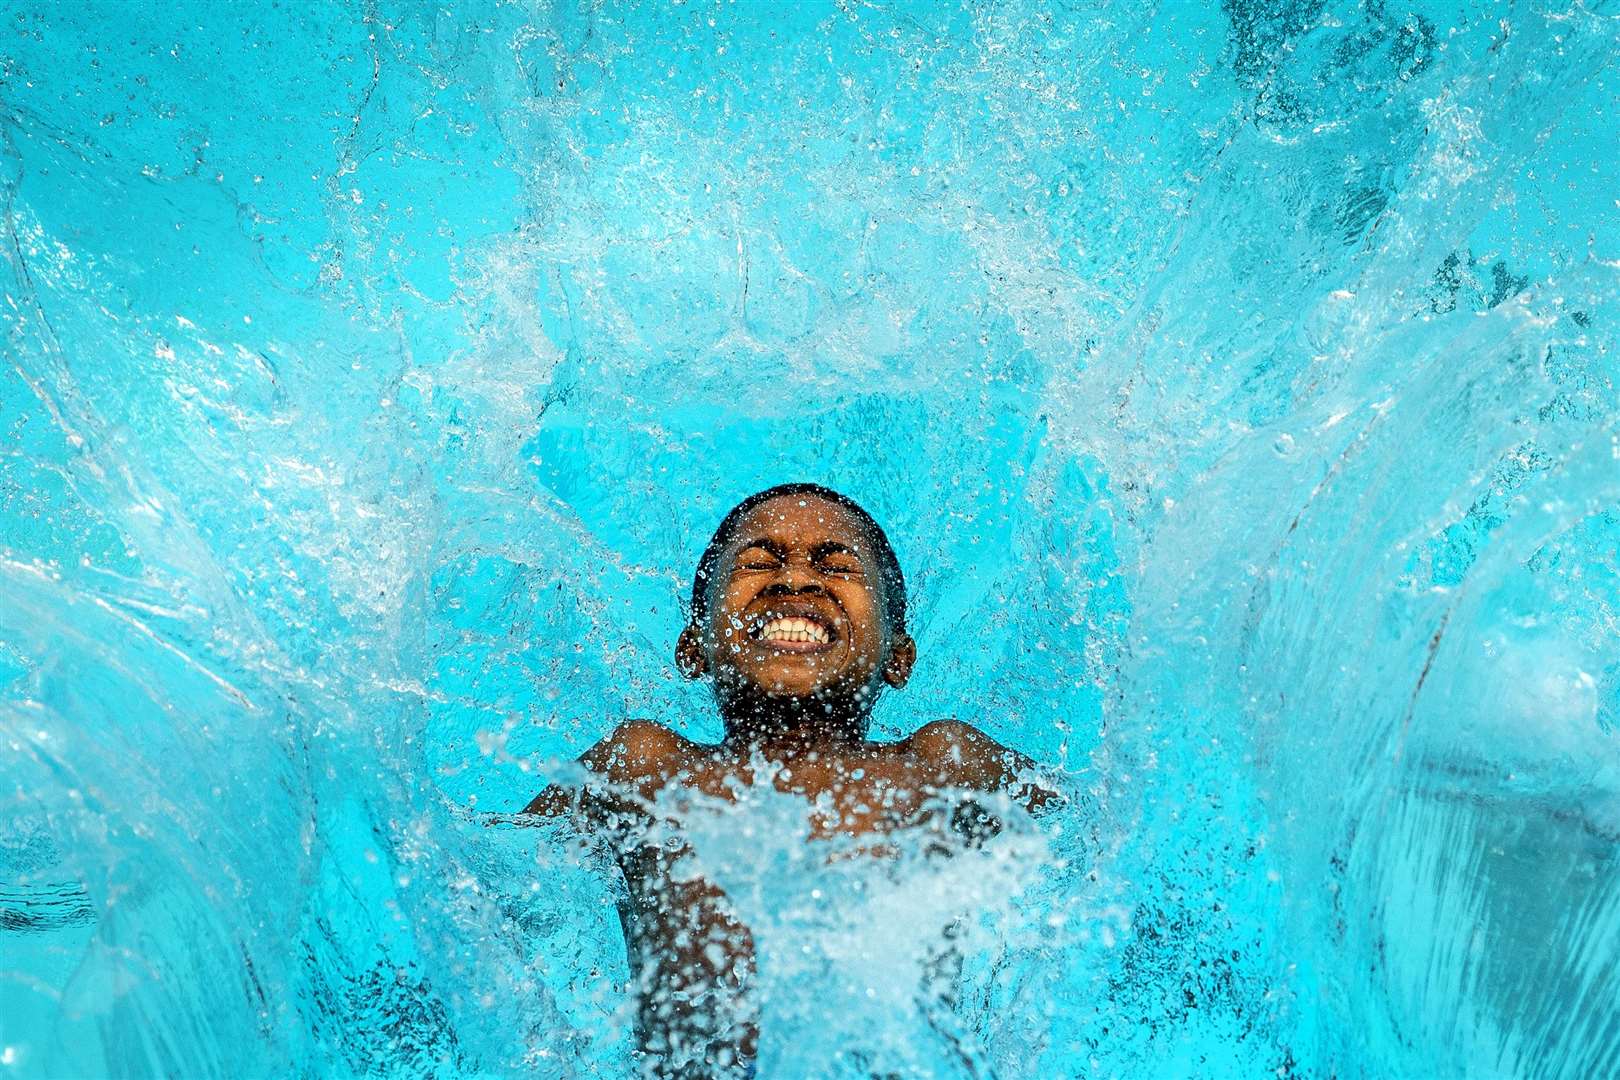 Reuben Hurst, 13, makes a splash as he cools down (Victoria Jones/PA)